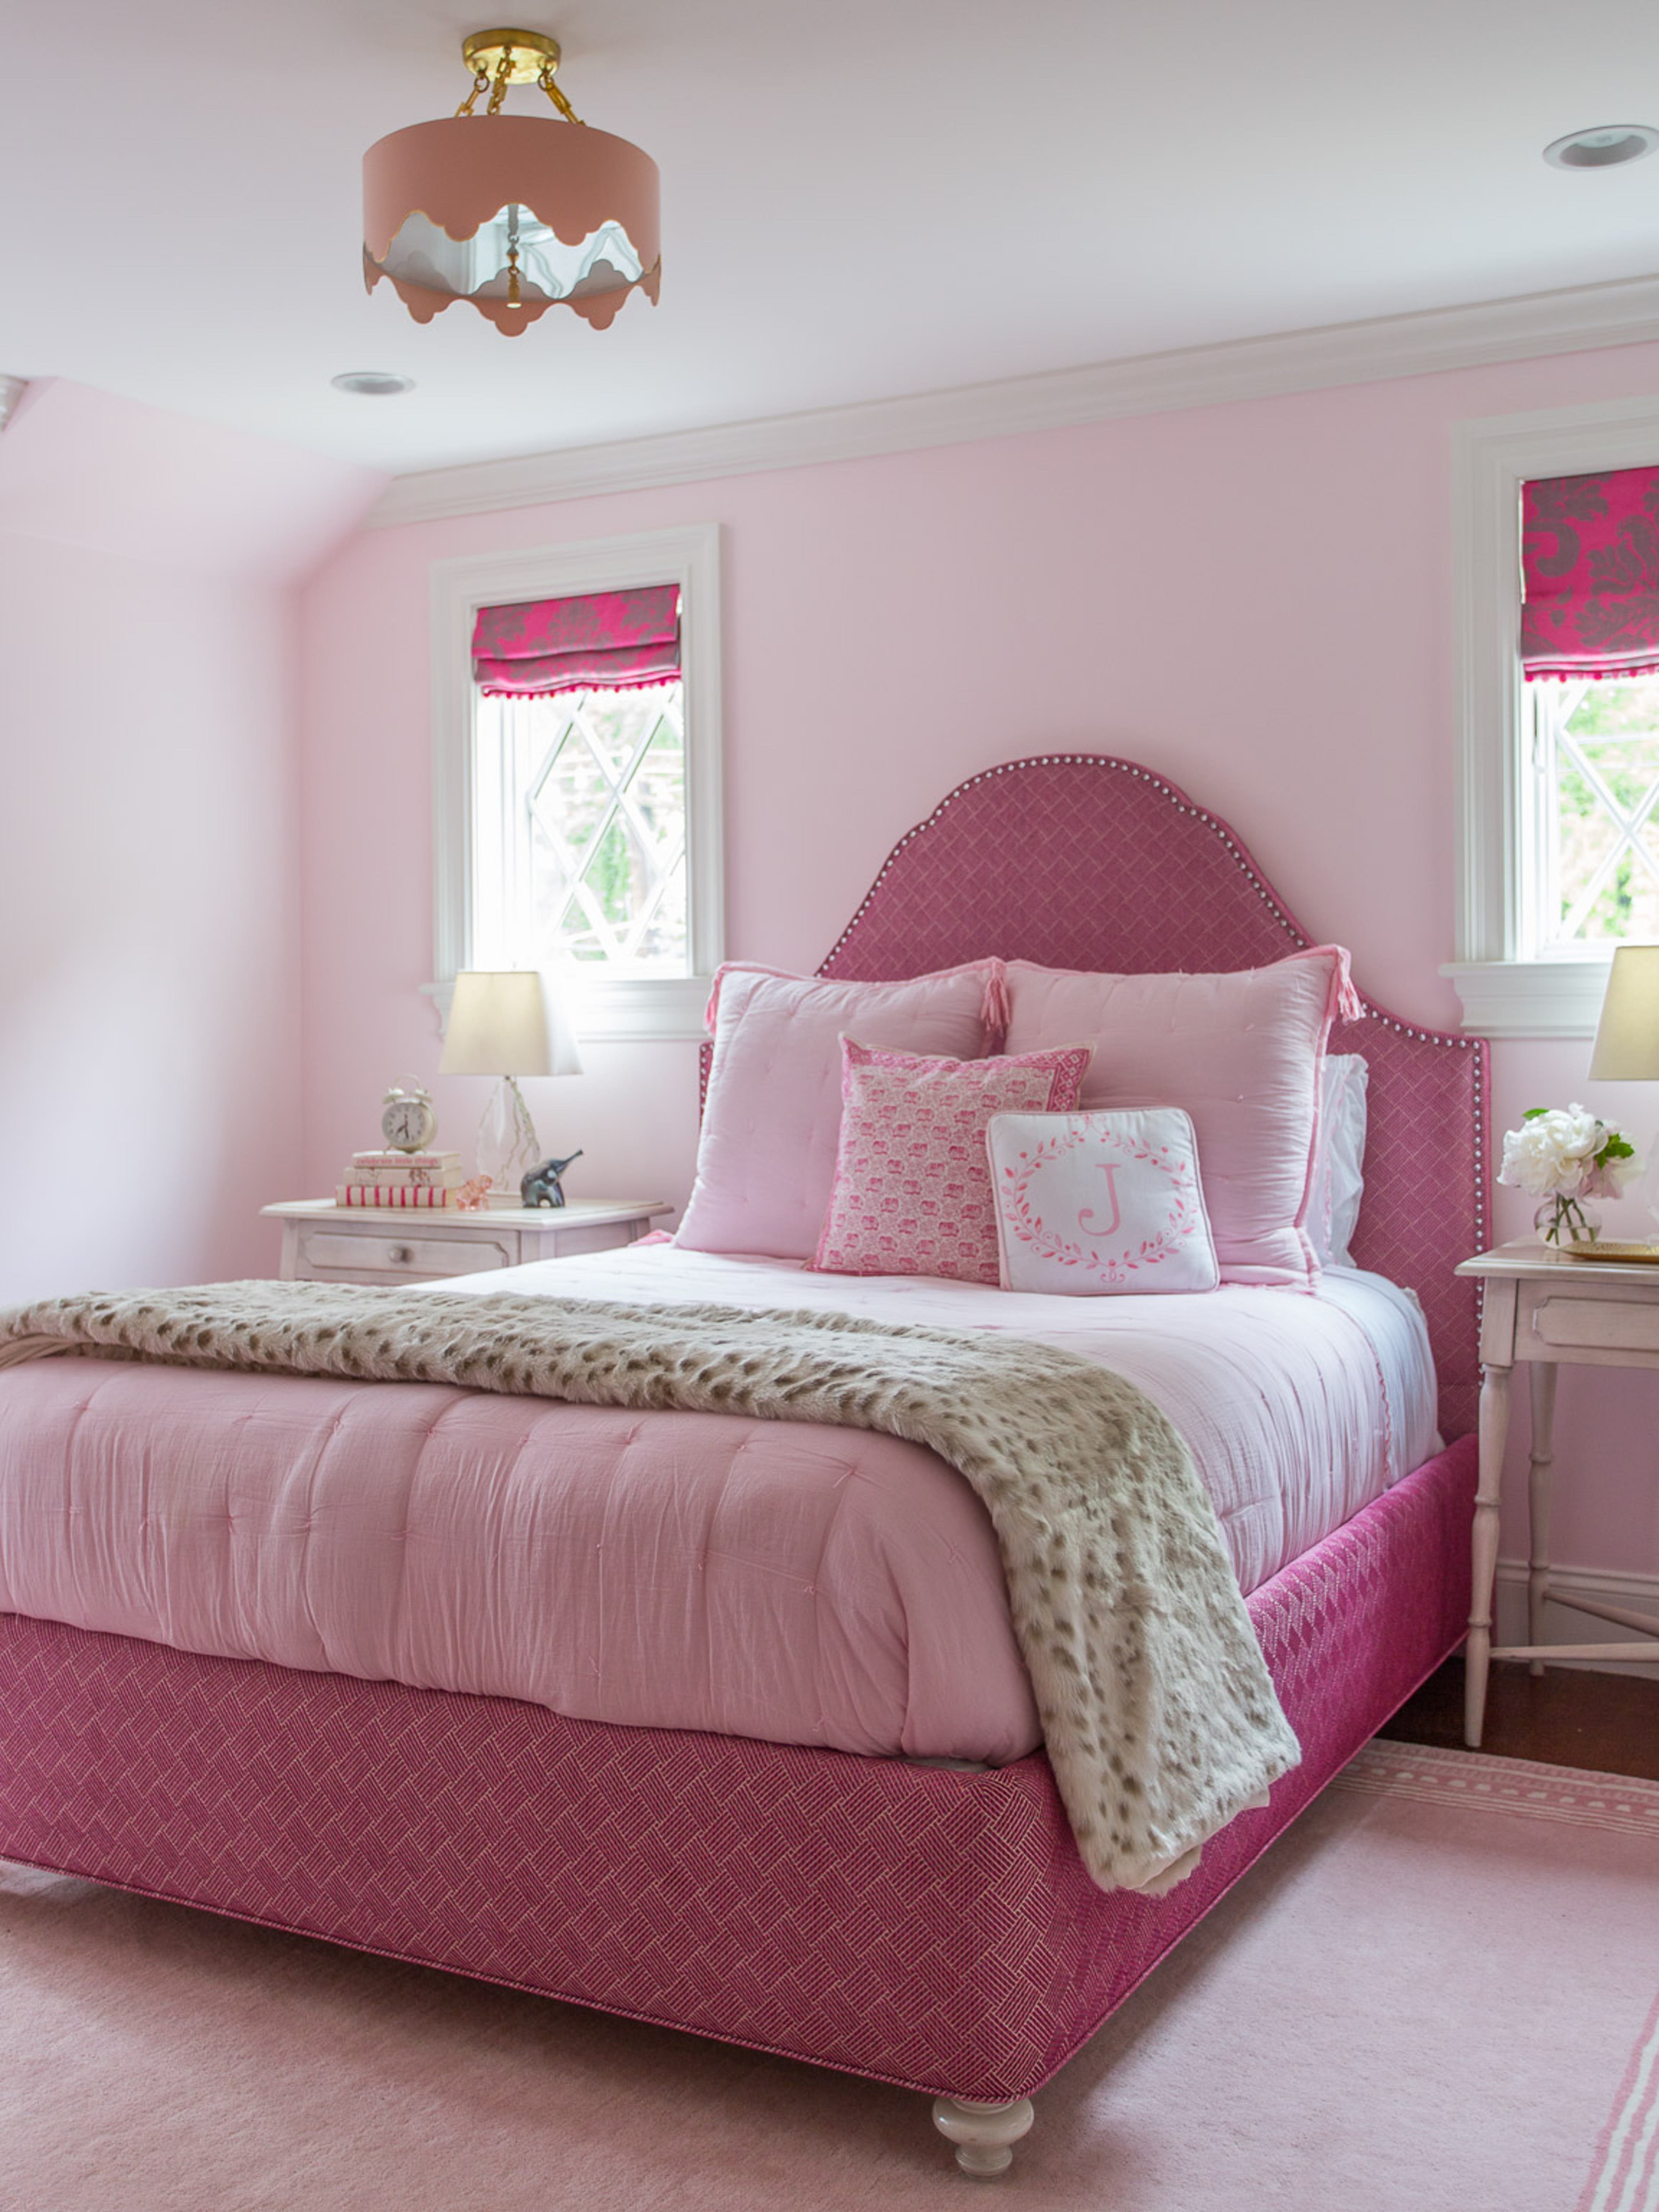 Комната в розовых тонах. Розовая комната для девочки. Розовая спальня. Спальня в розовом цвете. Спальня в розовом стиле.